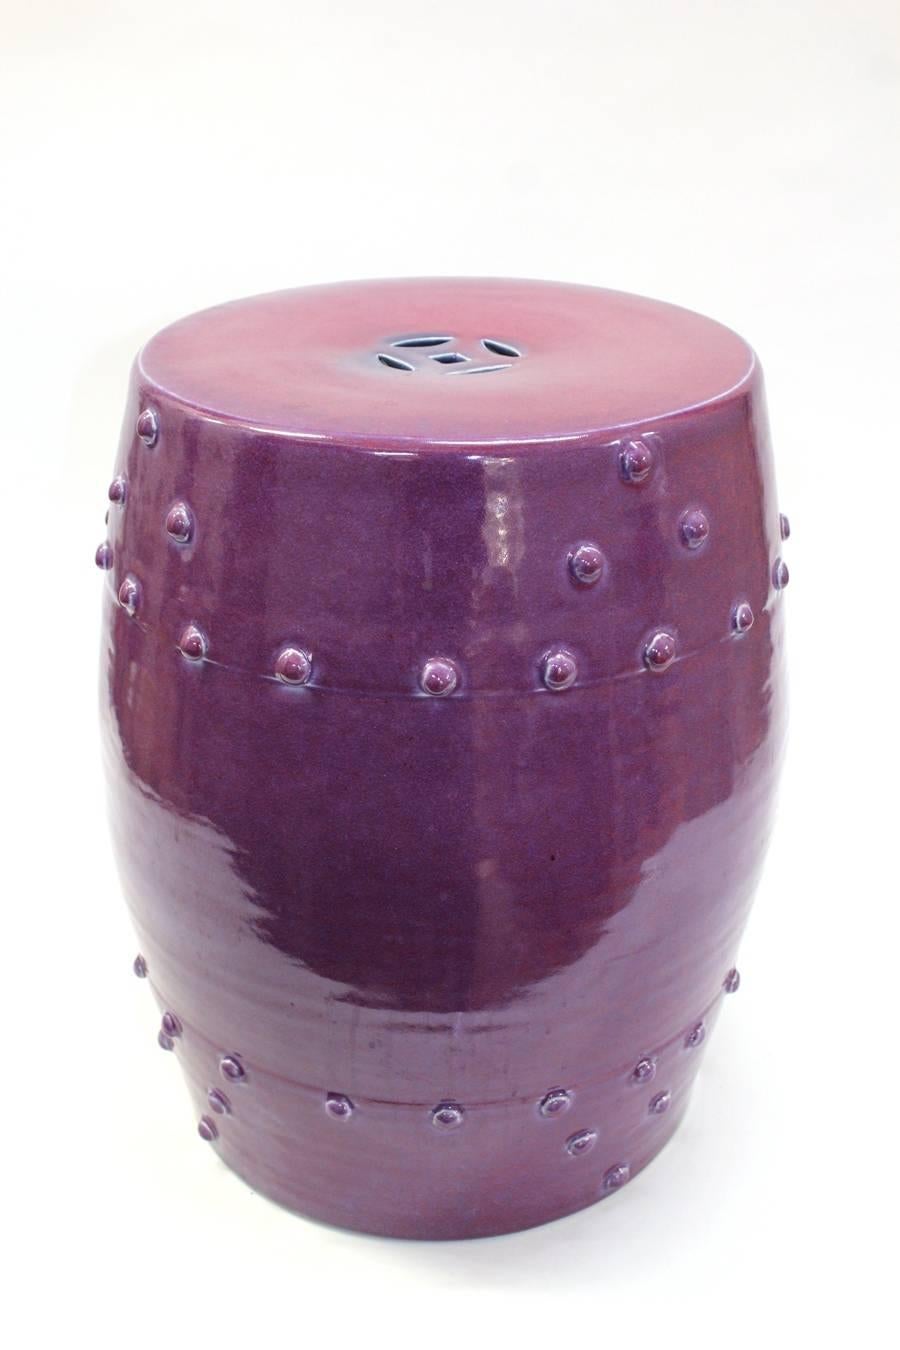 A Mid-Century ceramic garden seat in an unusual purple hue. In excellent vintage condition. 110336.

 